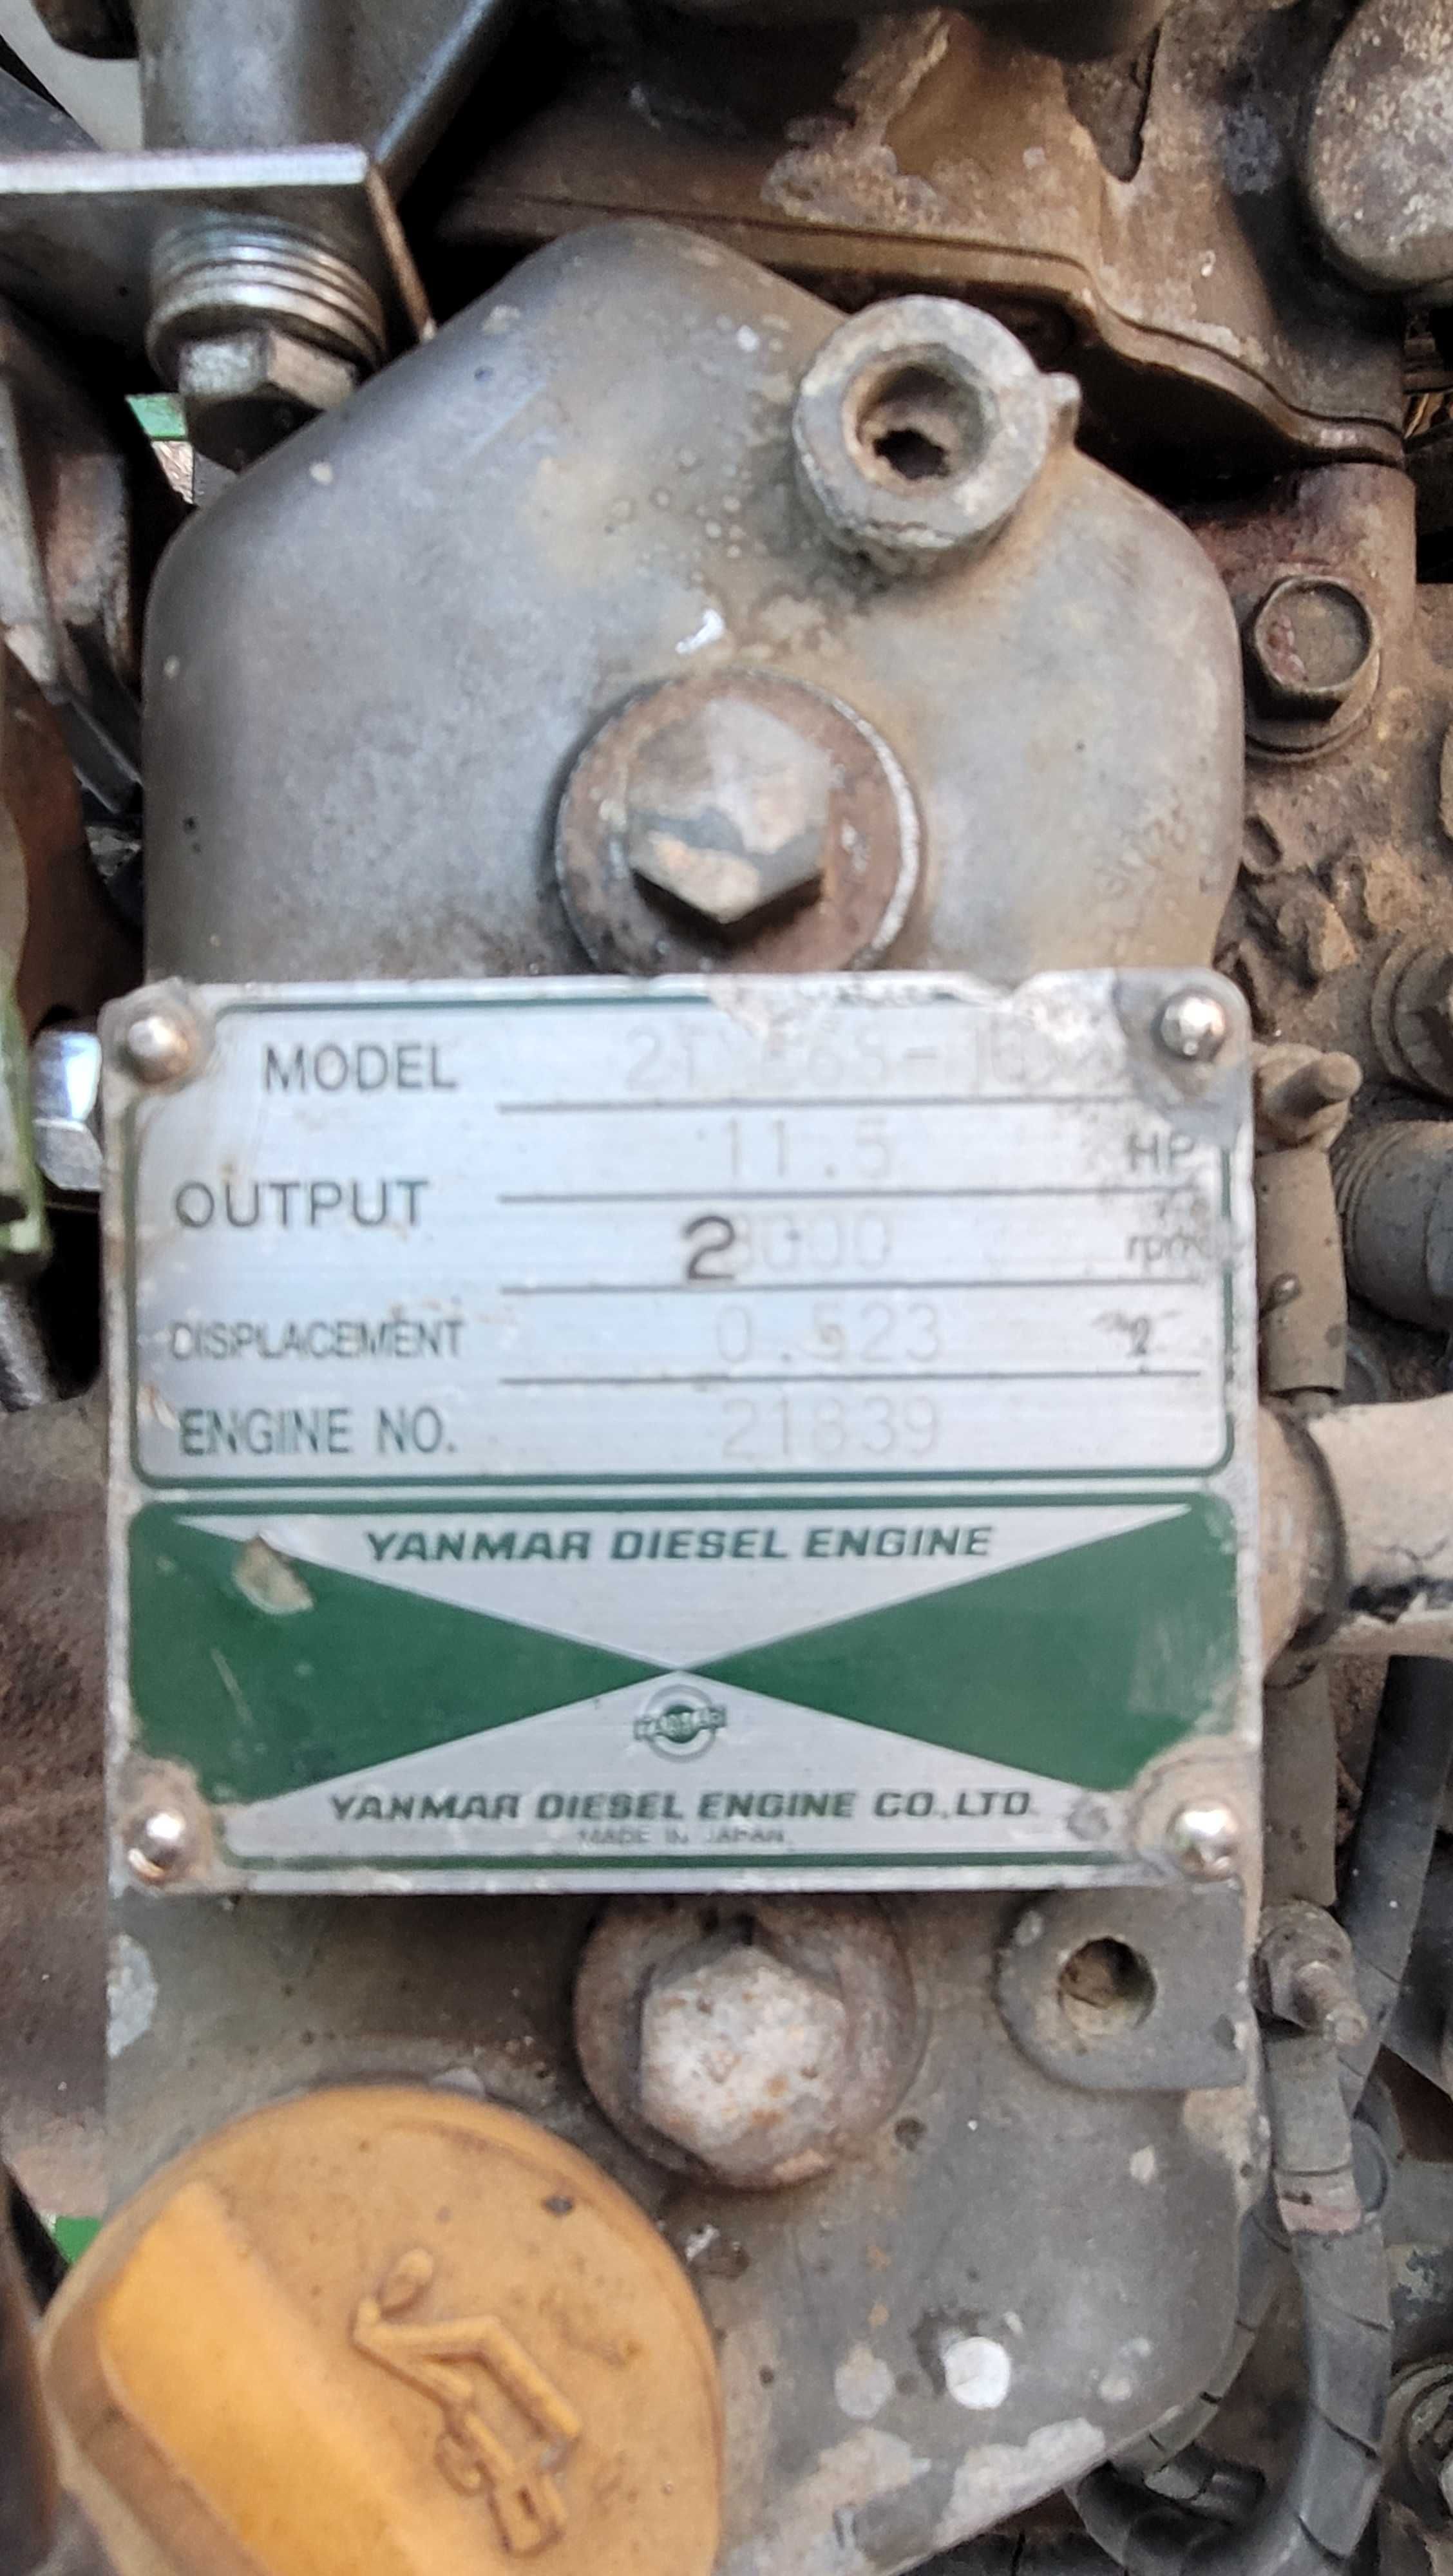 Motopompa SELWOOD samozasysającą silnik Yanmar diesel